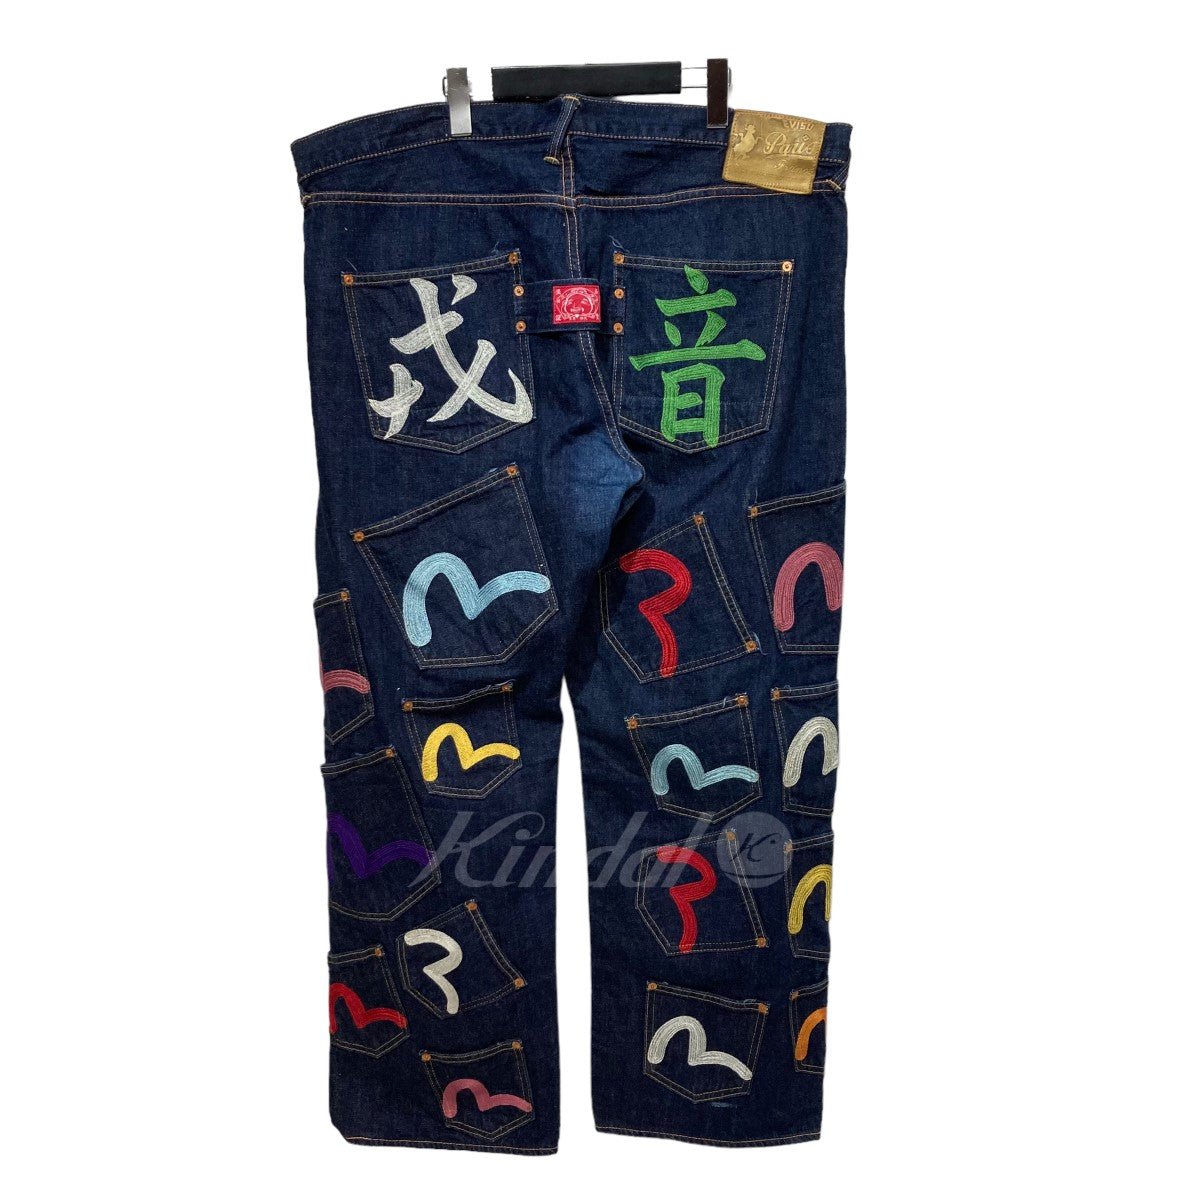 EVISU jeans(エビスジーンズ) EVISU 総刺繍 メニーポケット 塩谷 ...